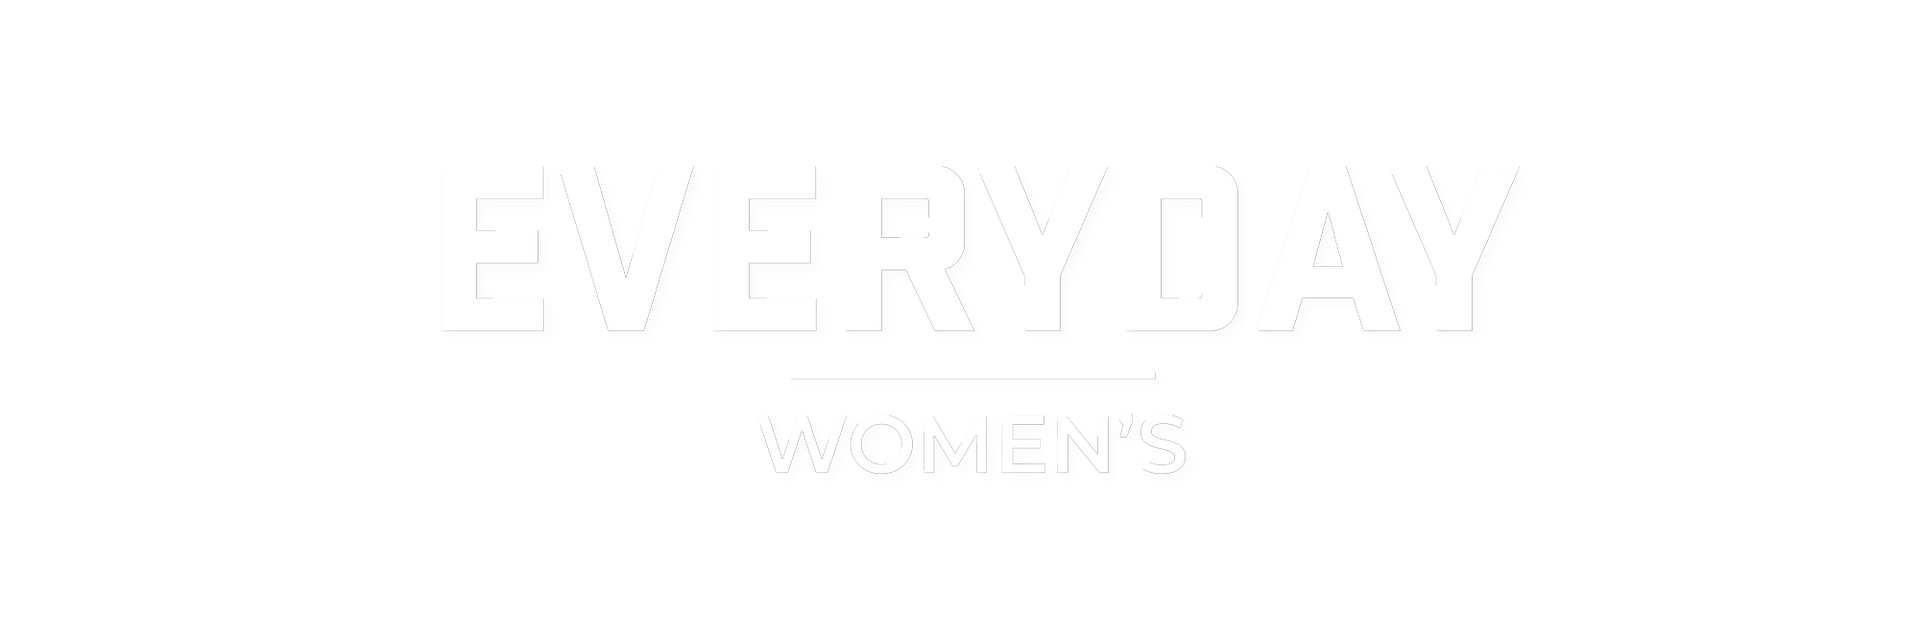 Women's Everyday  Header Image Text Overlay